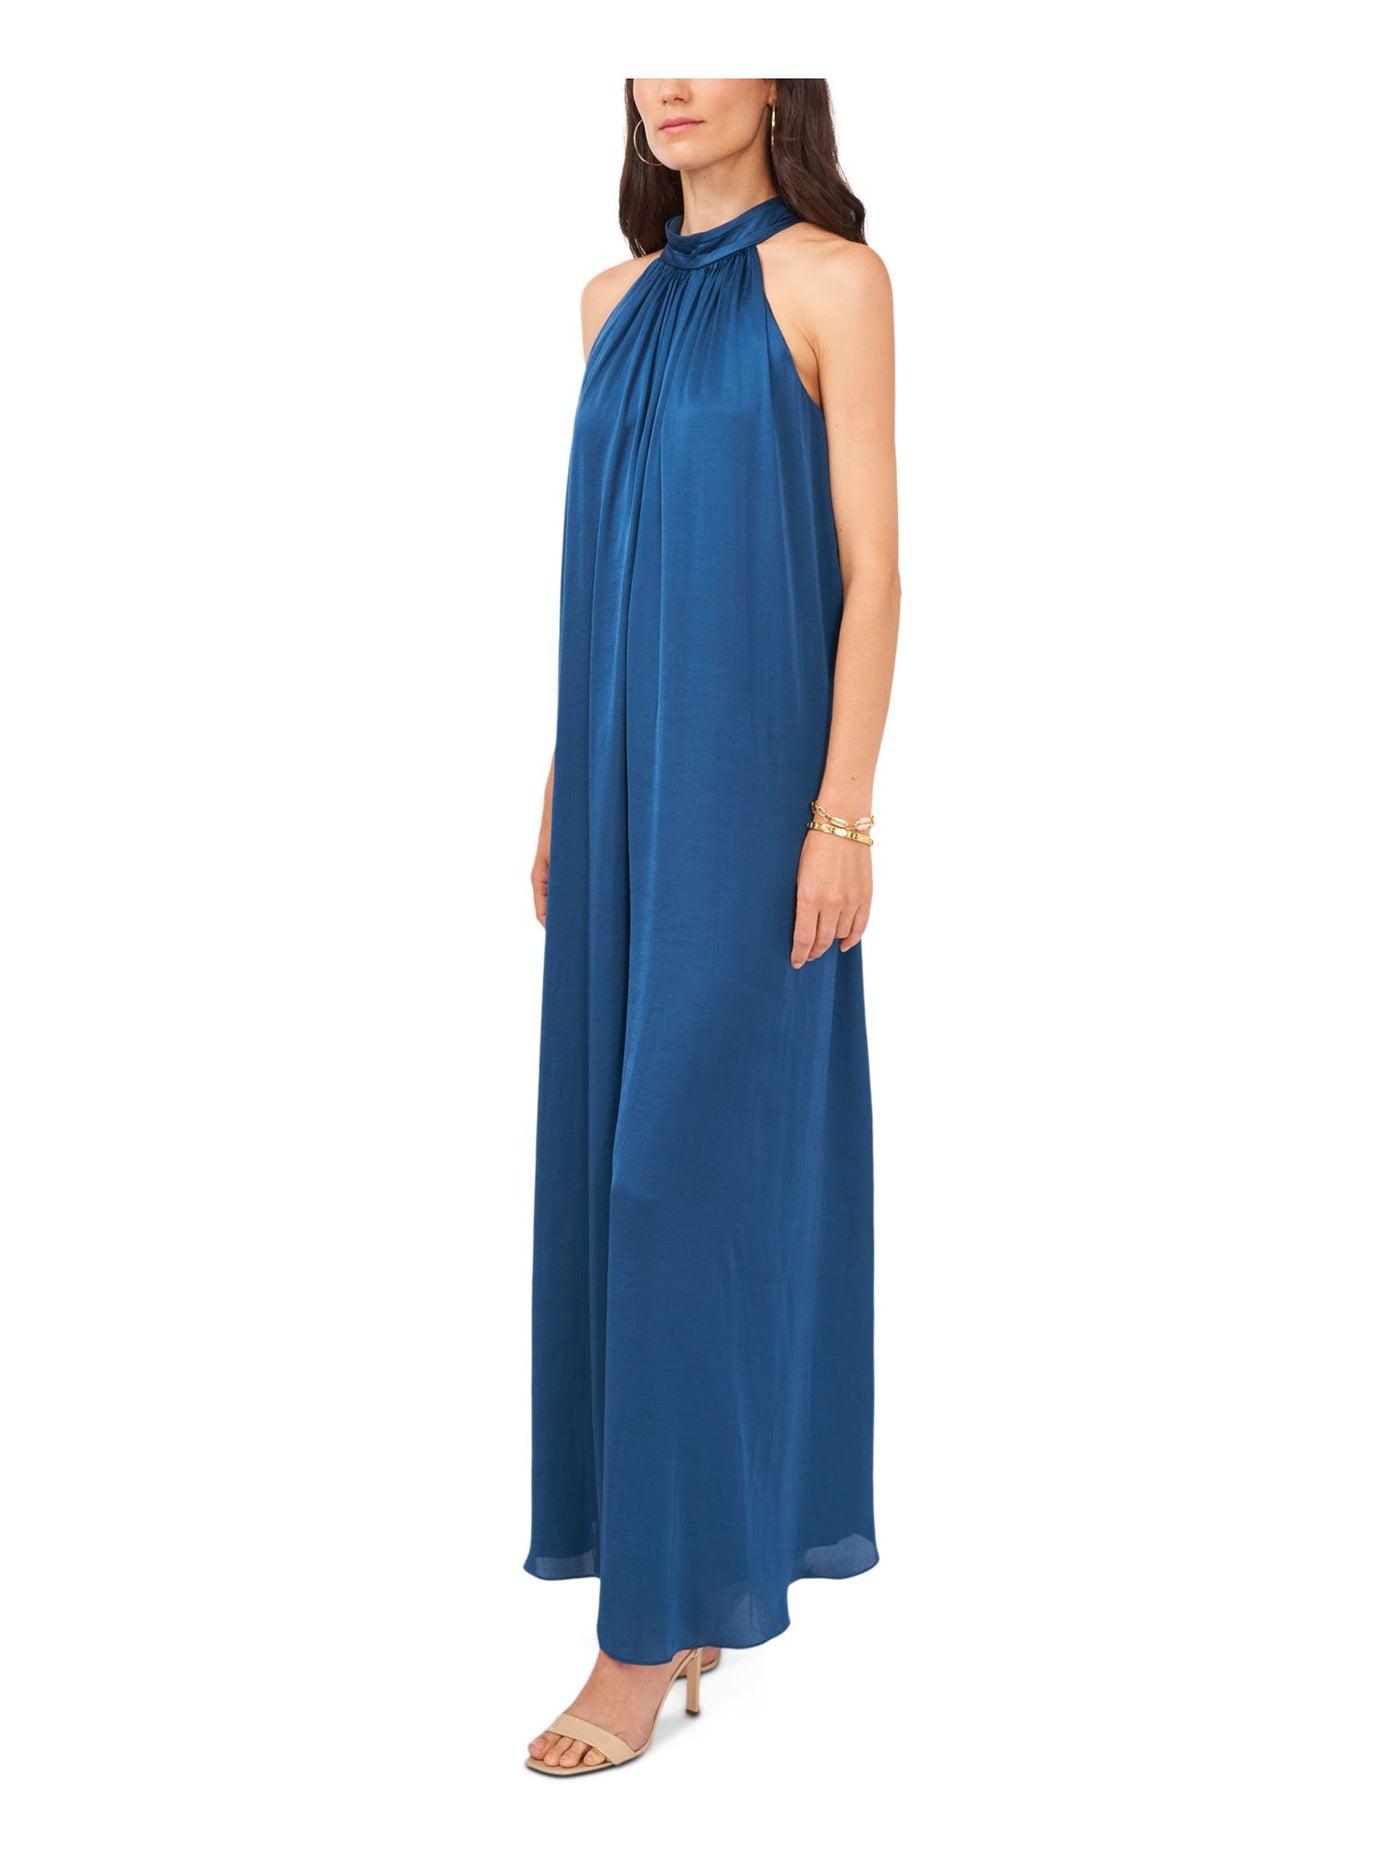 MSK Womens Blue Zippered Pleated Sleeveless Halter Cocktail Wide Leg Jumpsuit XL